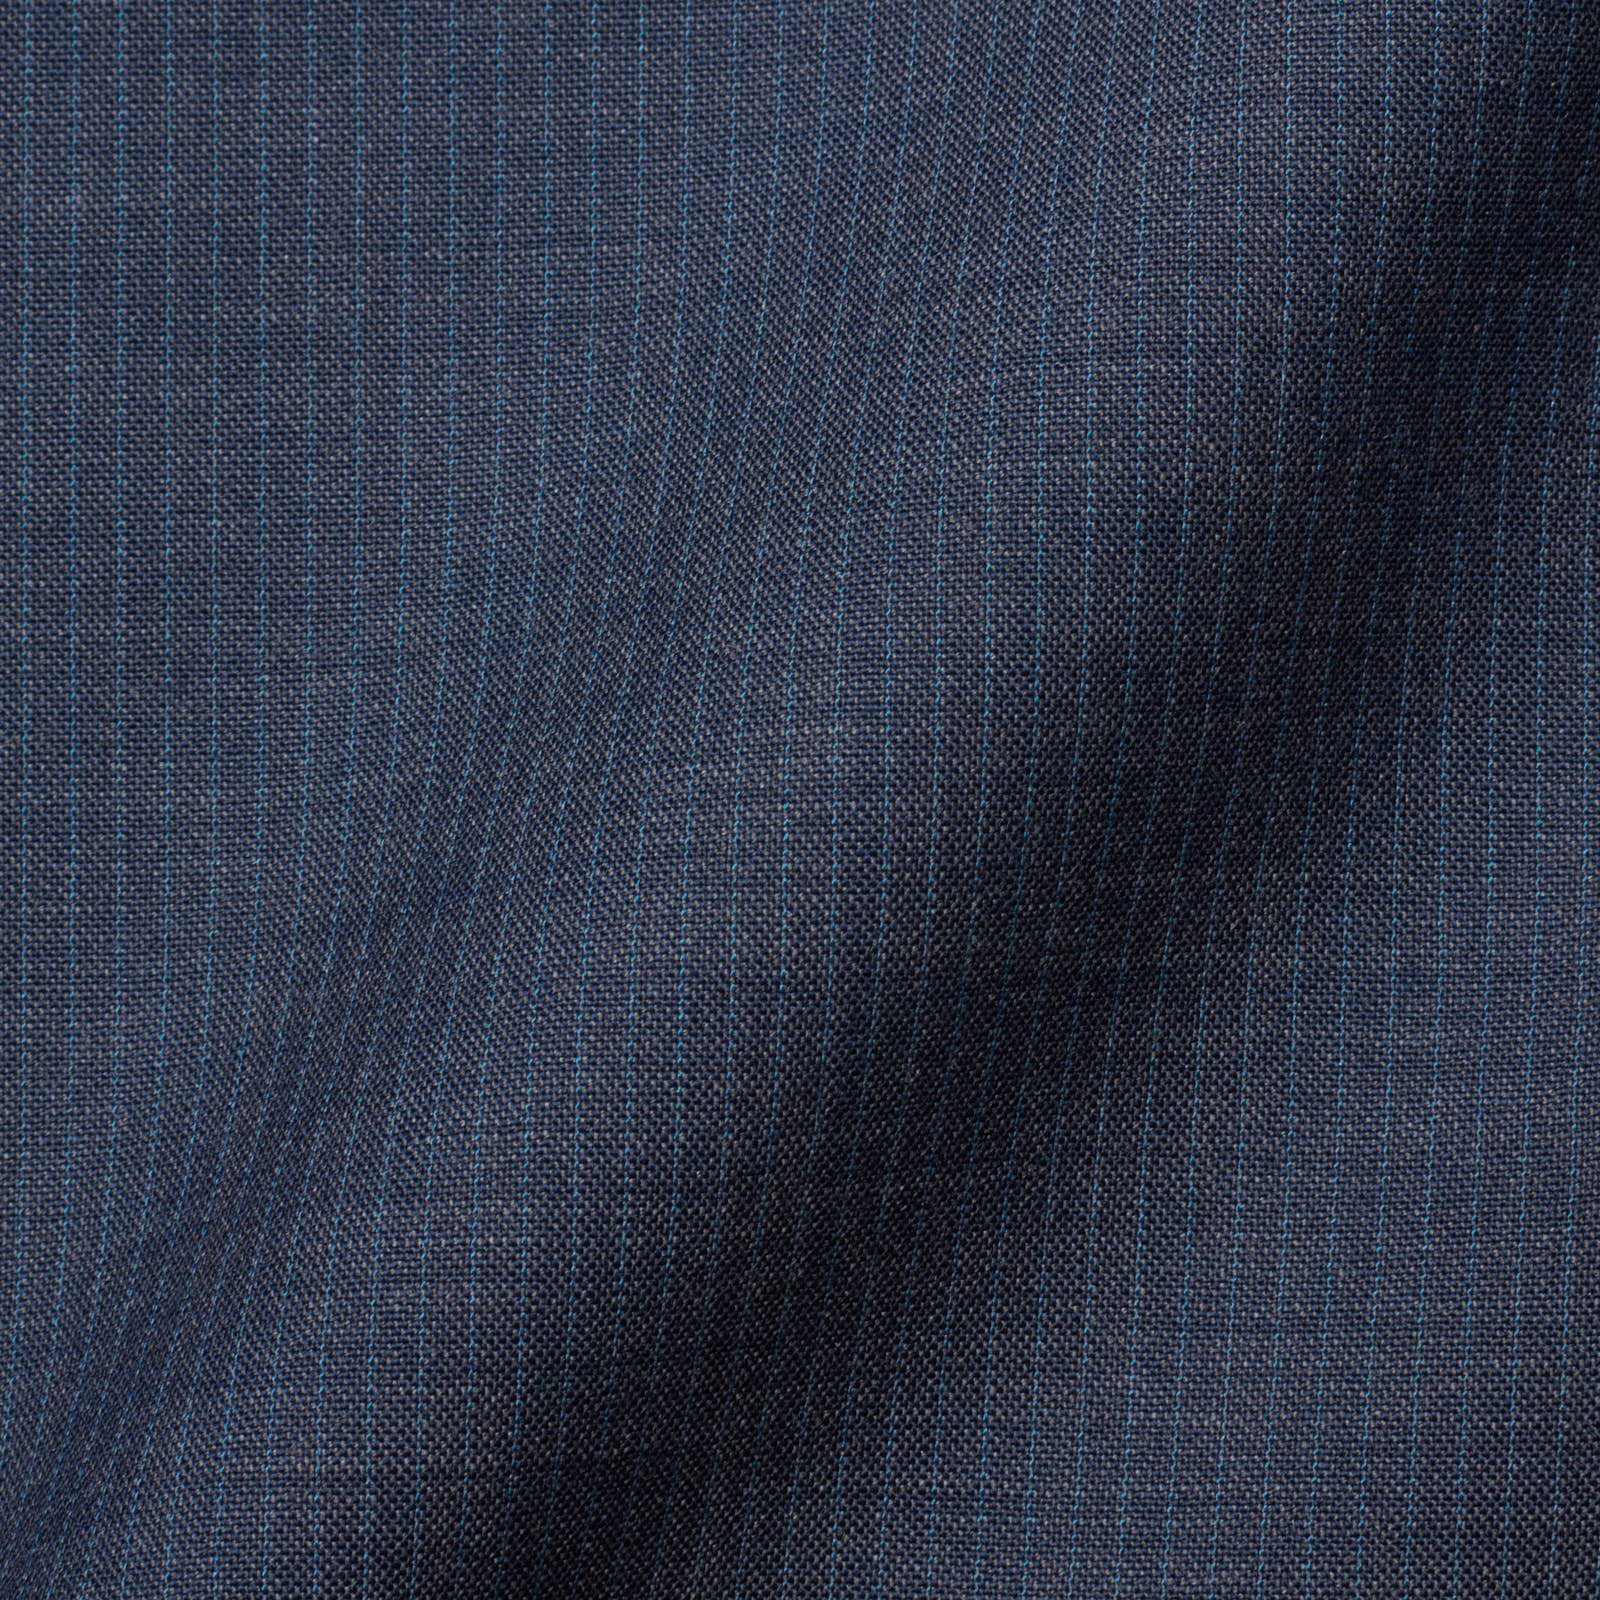 KITON Napoli for VANNUCCI Handmade Blue Striped Wool Suit EU 52 NEW US 42